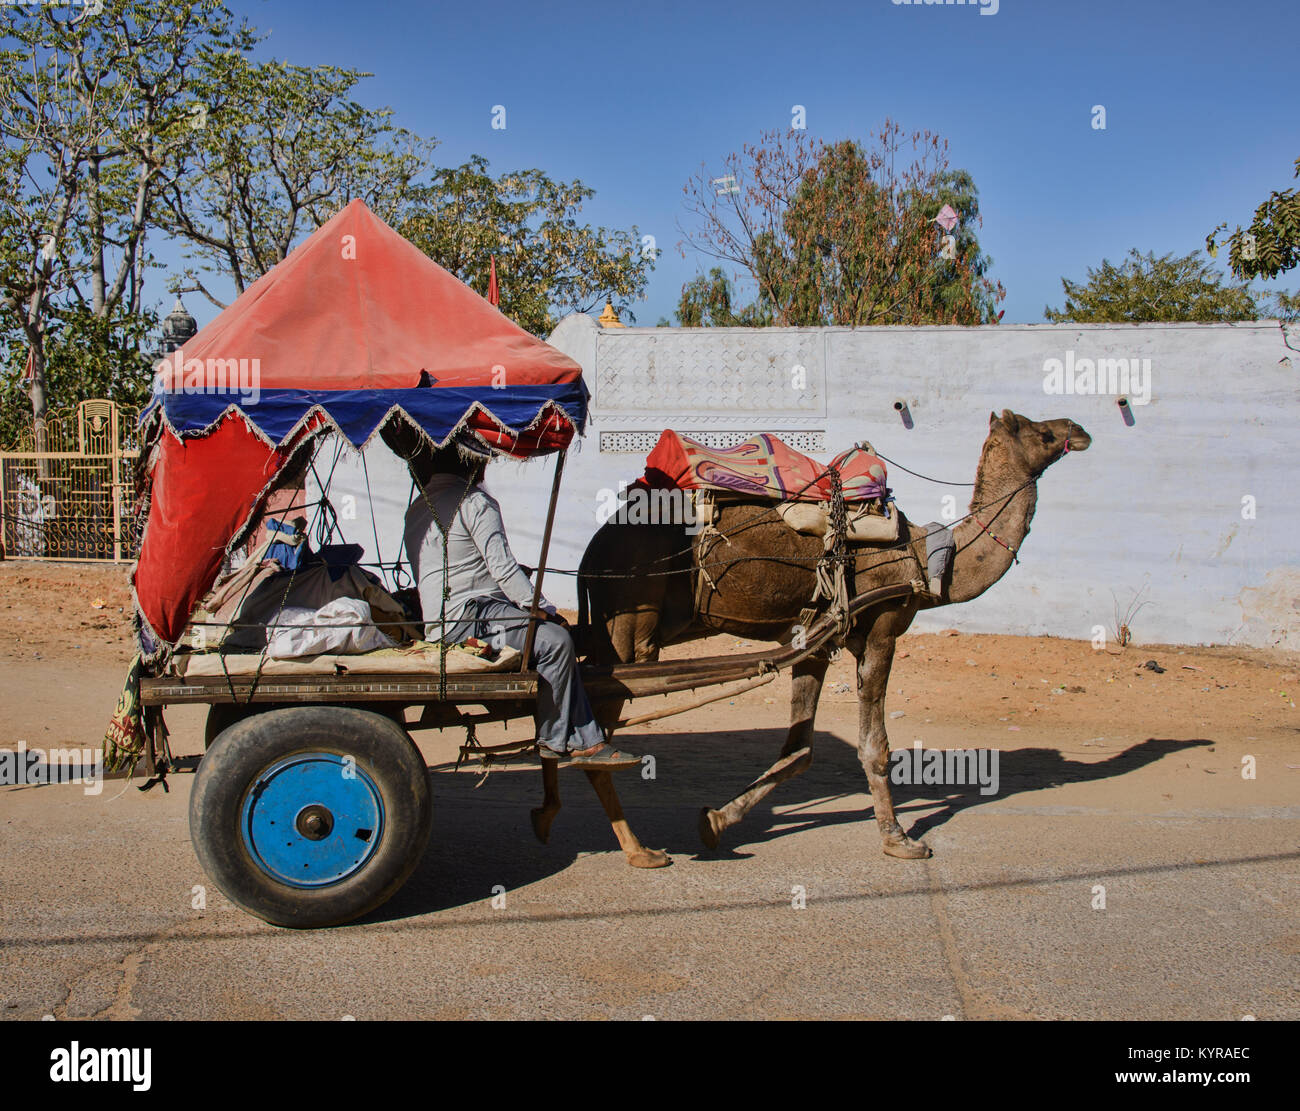 camel-caravan-in-pushkar-rajasthan-indian-KYRAEC.jpg